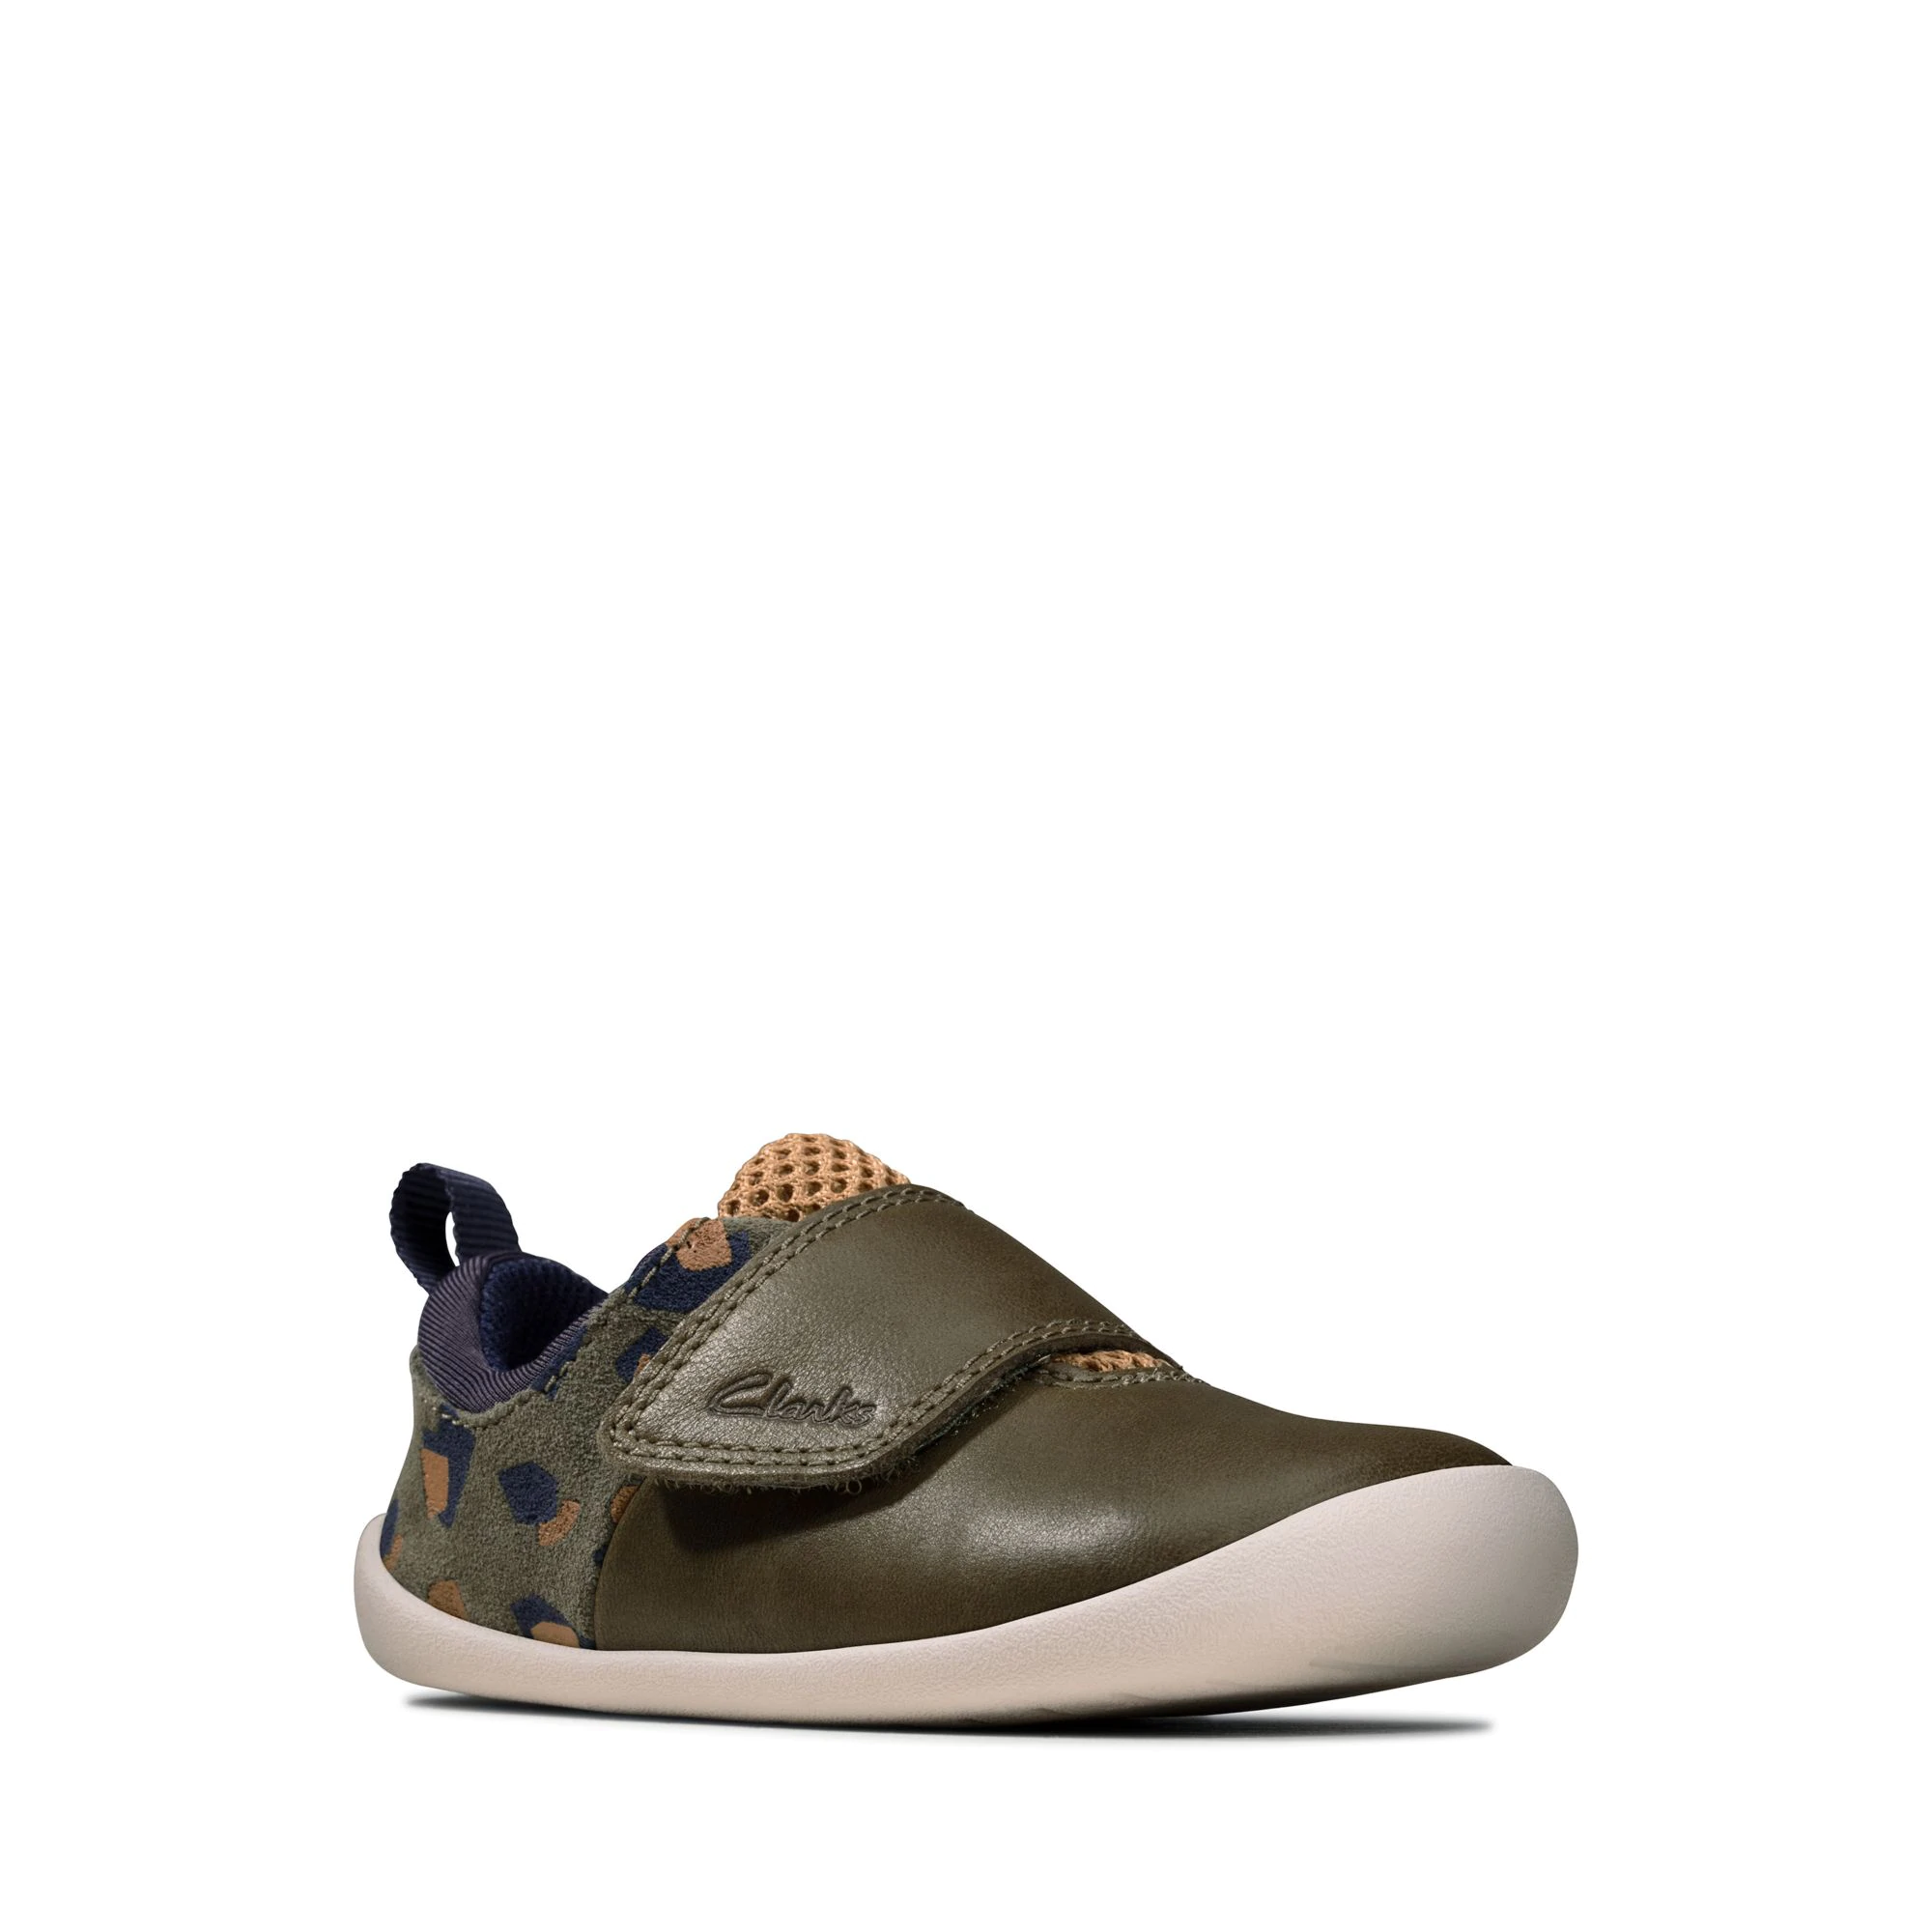 Clarks Toddler Shoes - Olive leather - 502756F ROAMER SPORT T